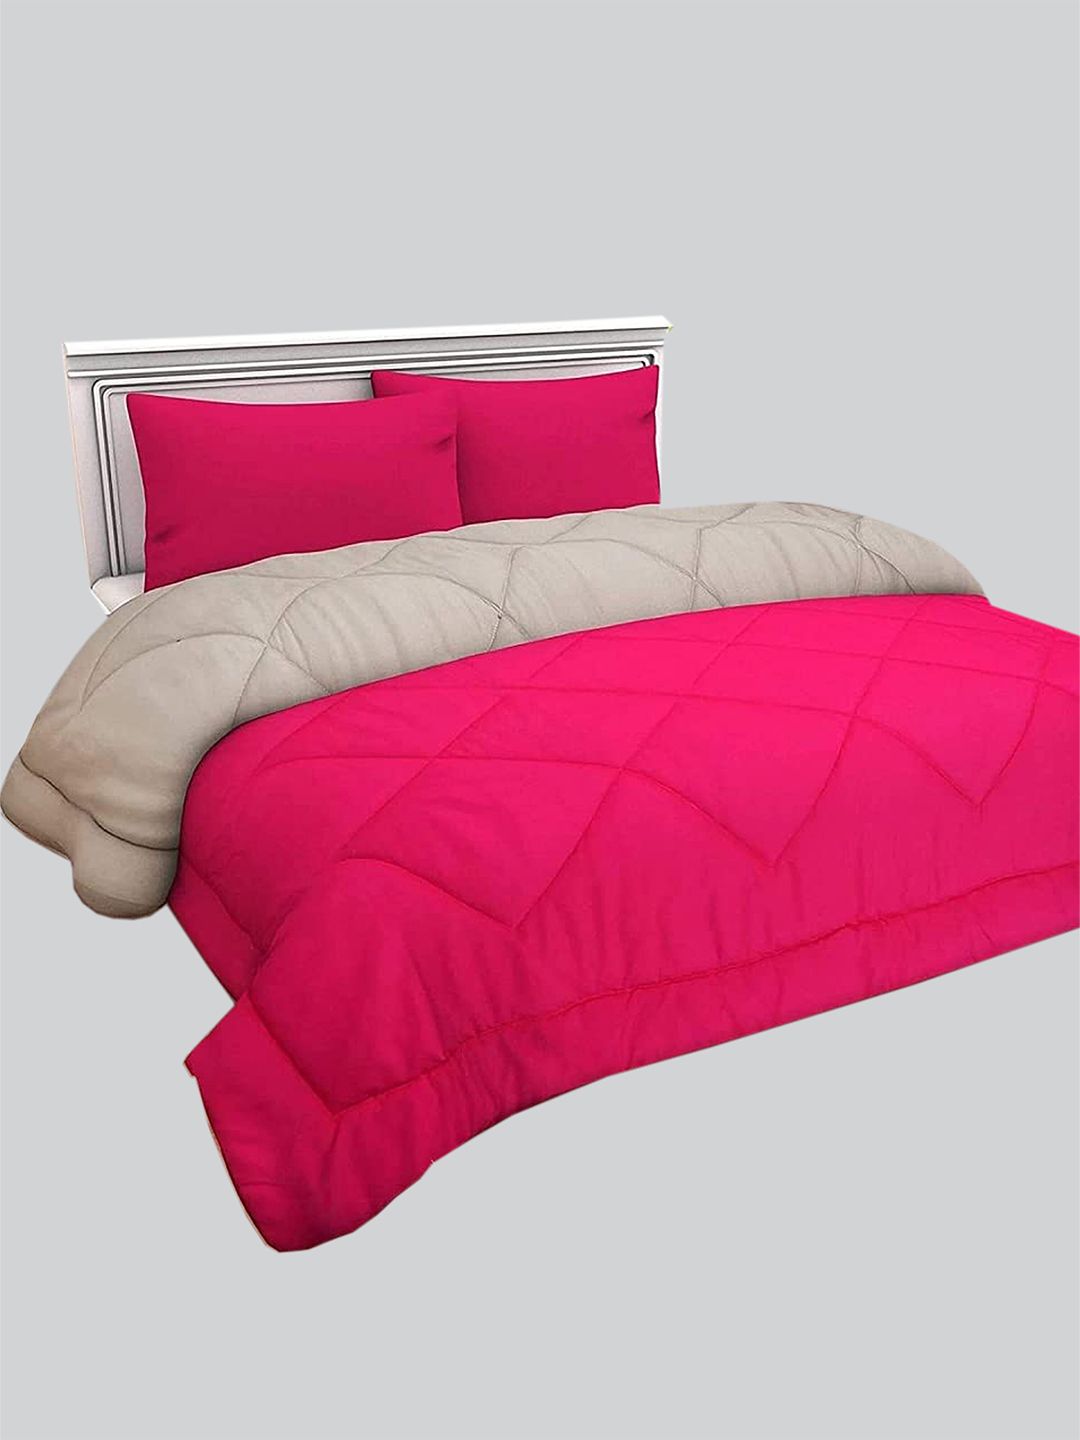 RAASO Pink & Grey Microfiber AC Room Single Bed Blanket Price in India